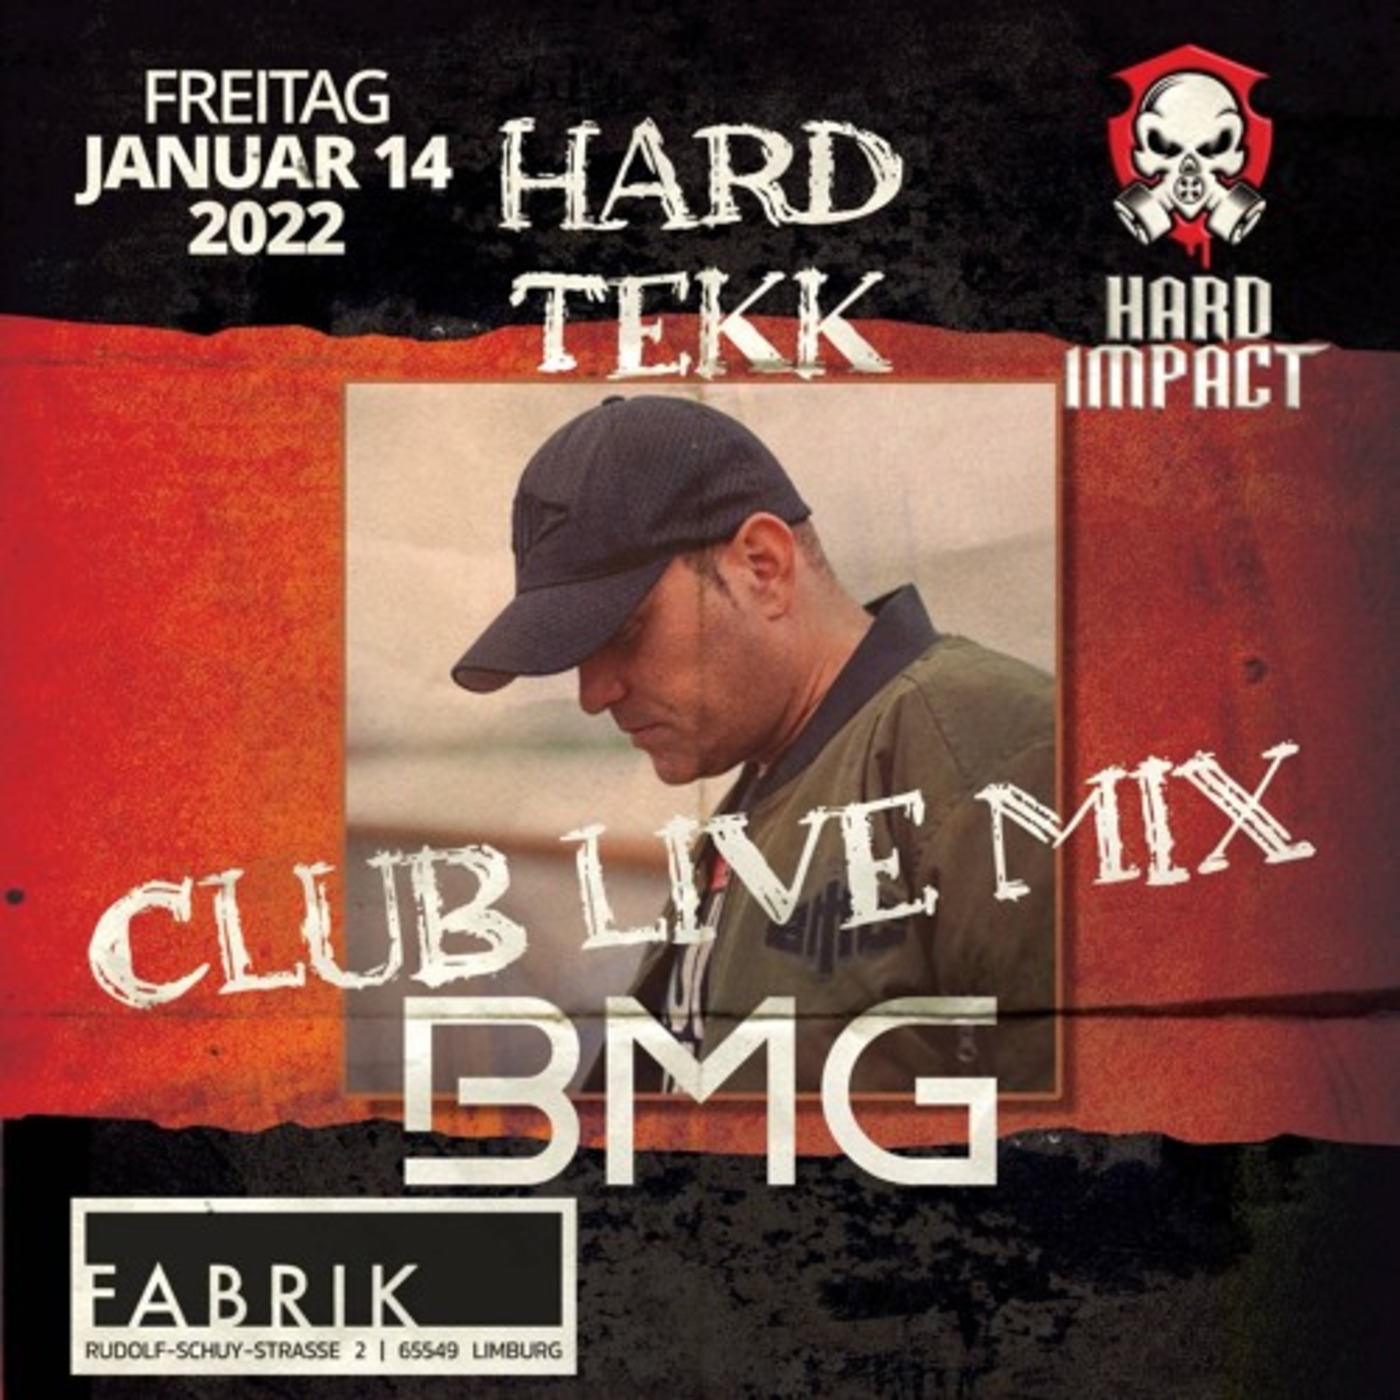 BMG aka Brachiale Musikgestalter @ Hard Impact | 2022 / Fabrik, Limburg [Club Live Set] // Tekk